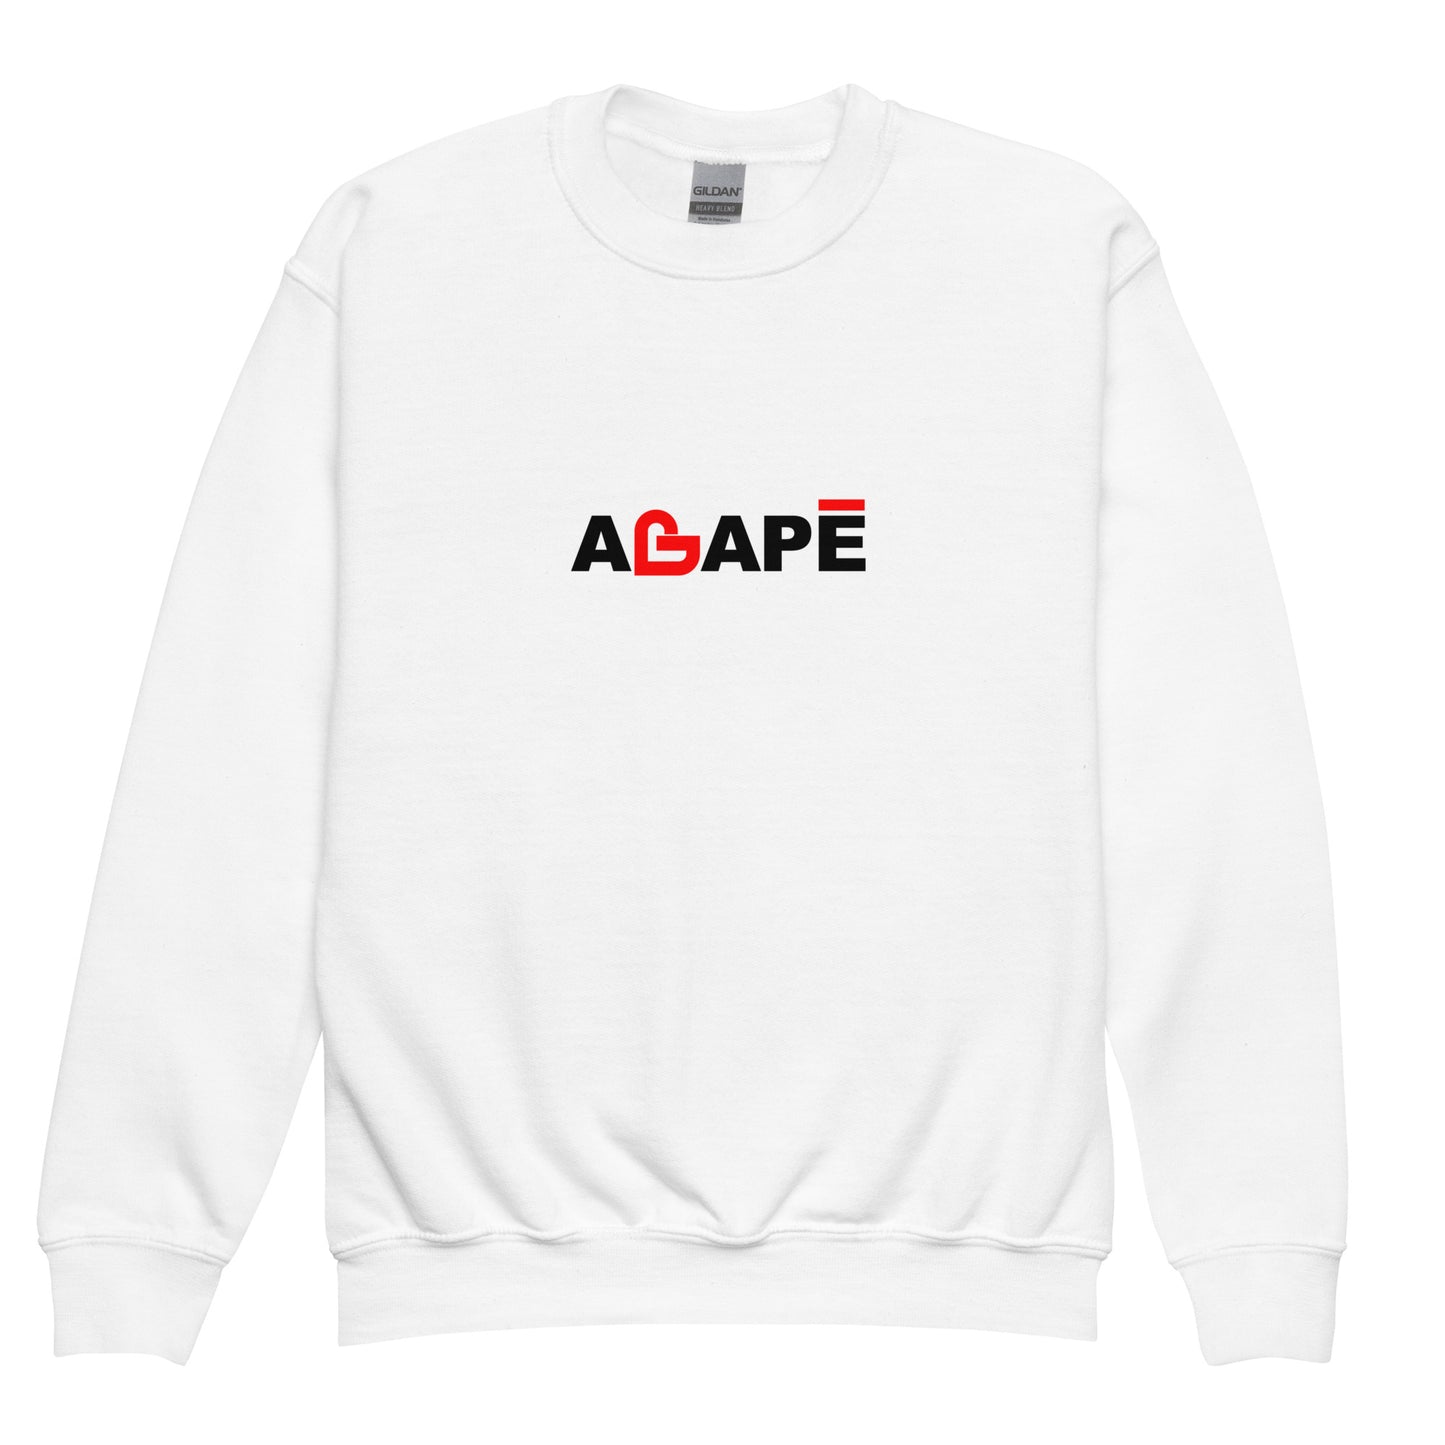 Agape Youth crewneck sweatshirt